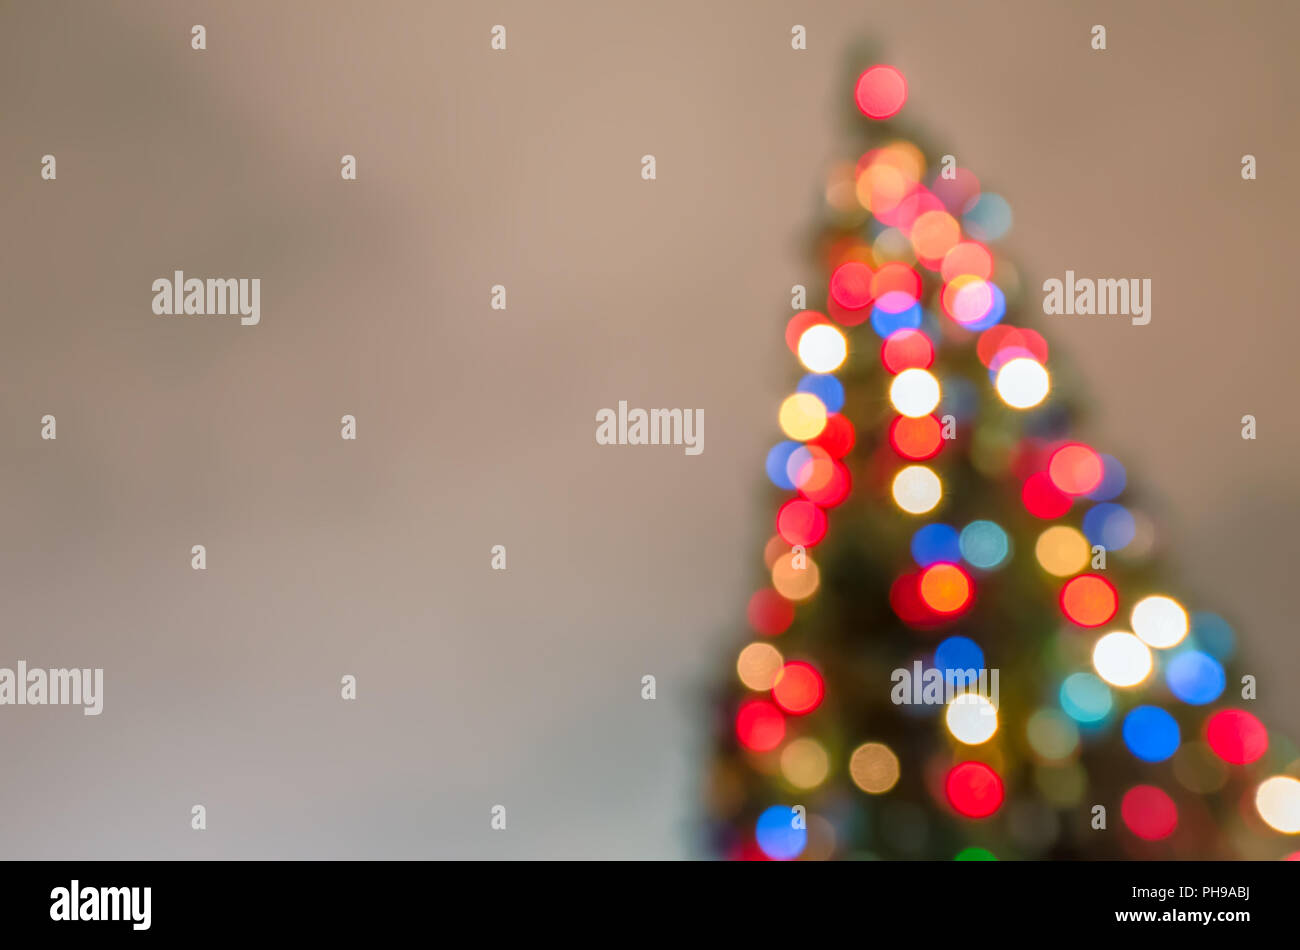 Defocused christmas tree with blurred lights Stock Photo